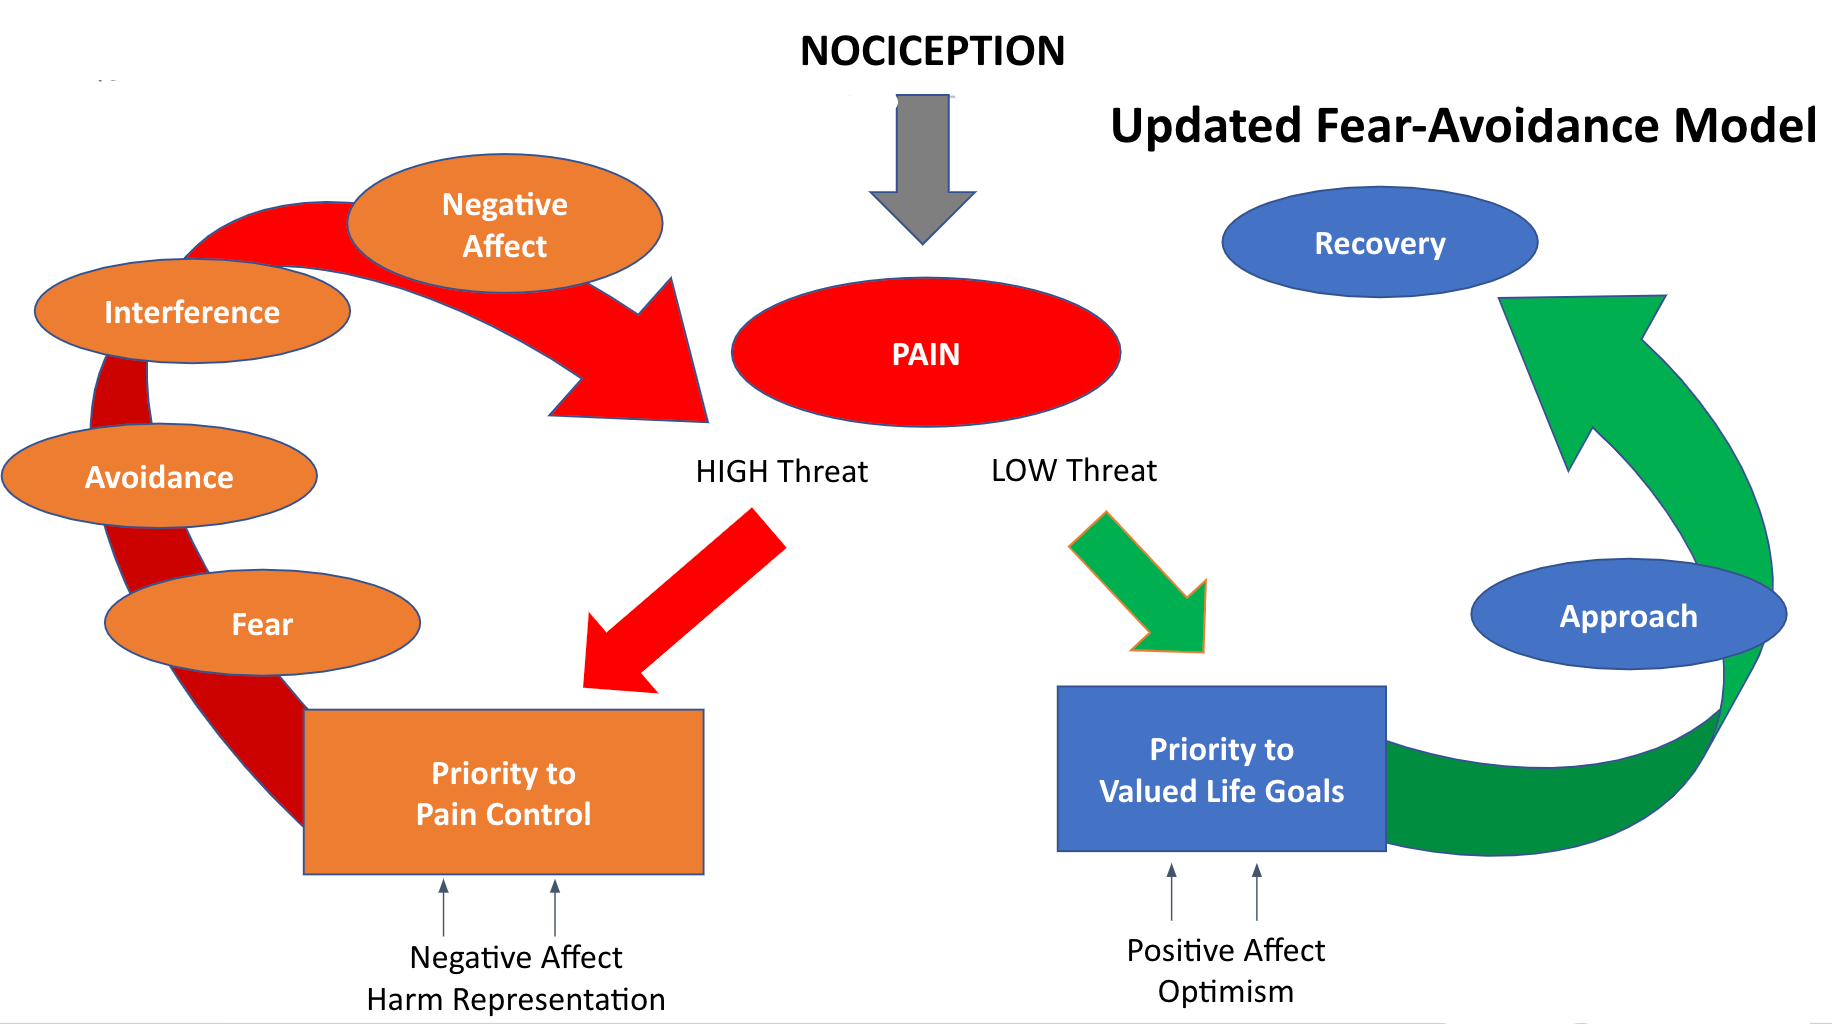 Nocioception or Fear-Avoidance Model